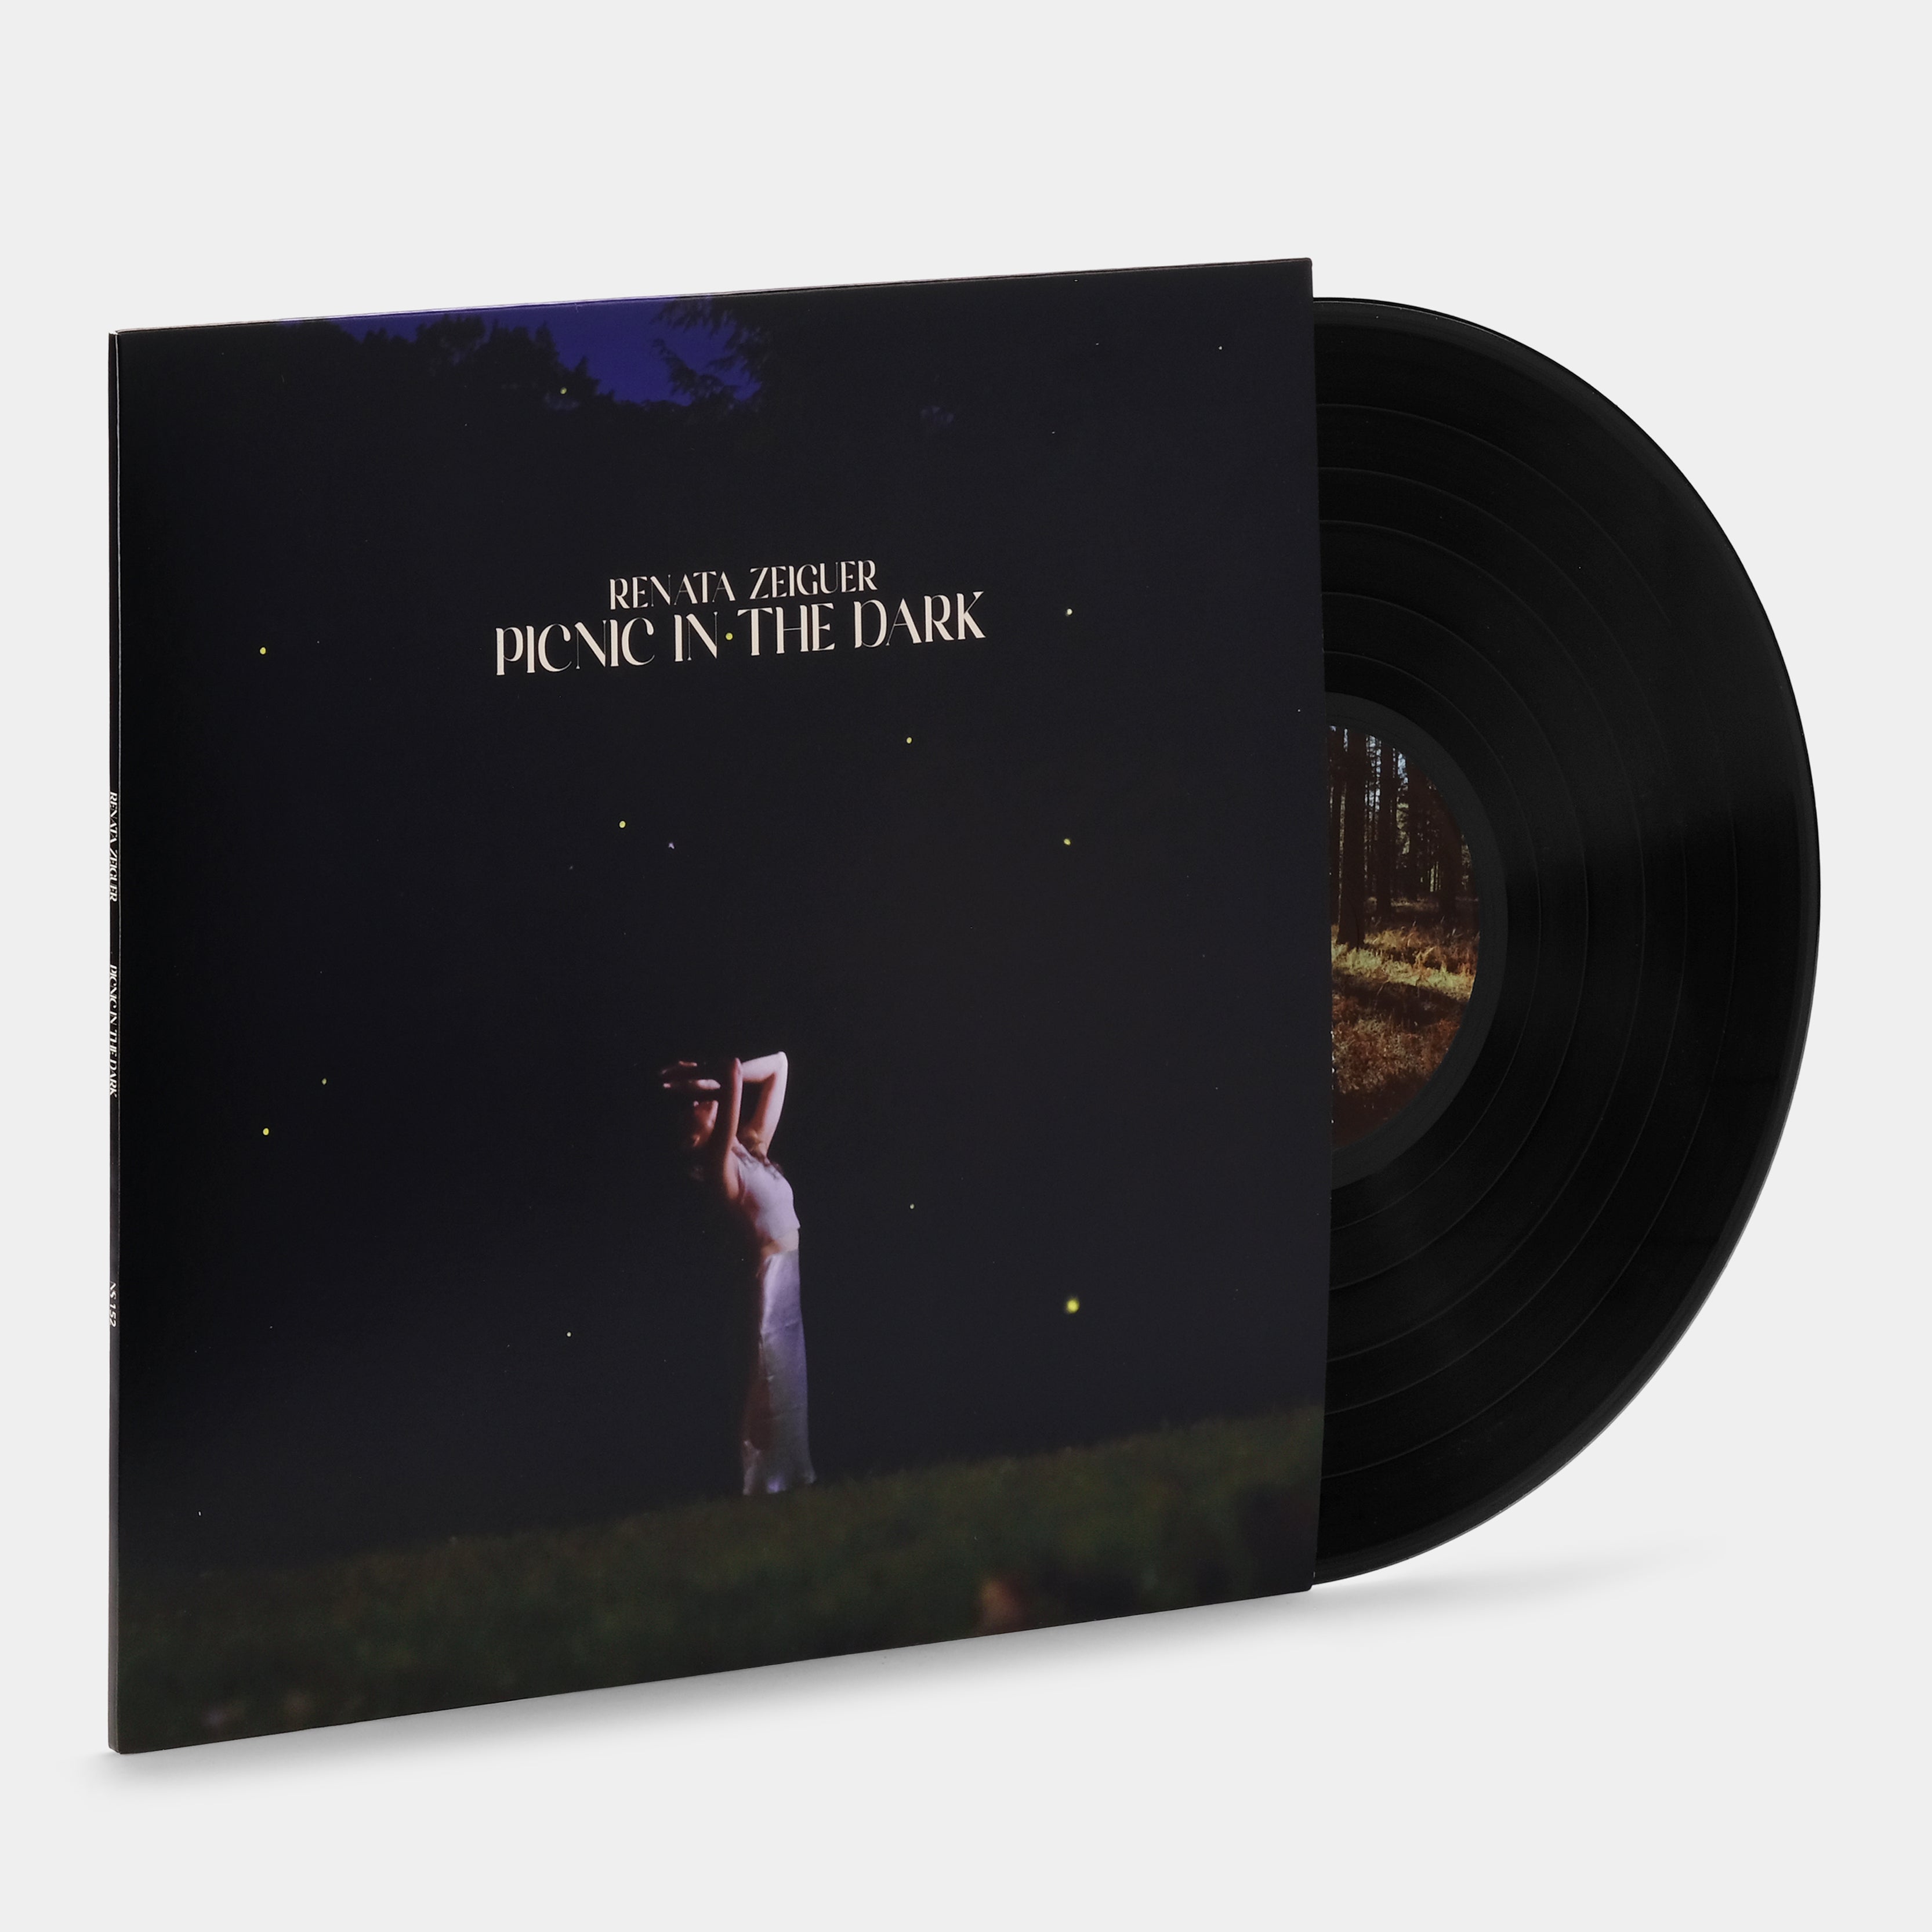 Renata Zeiguer - Picnic in the Dark LP Vinyl Record